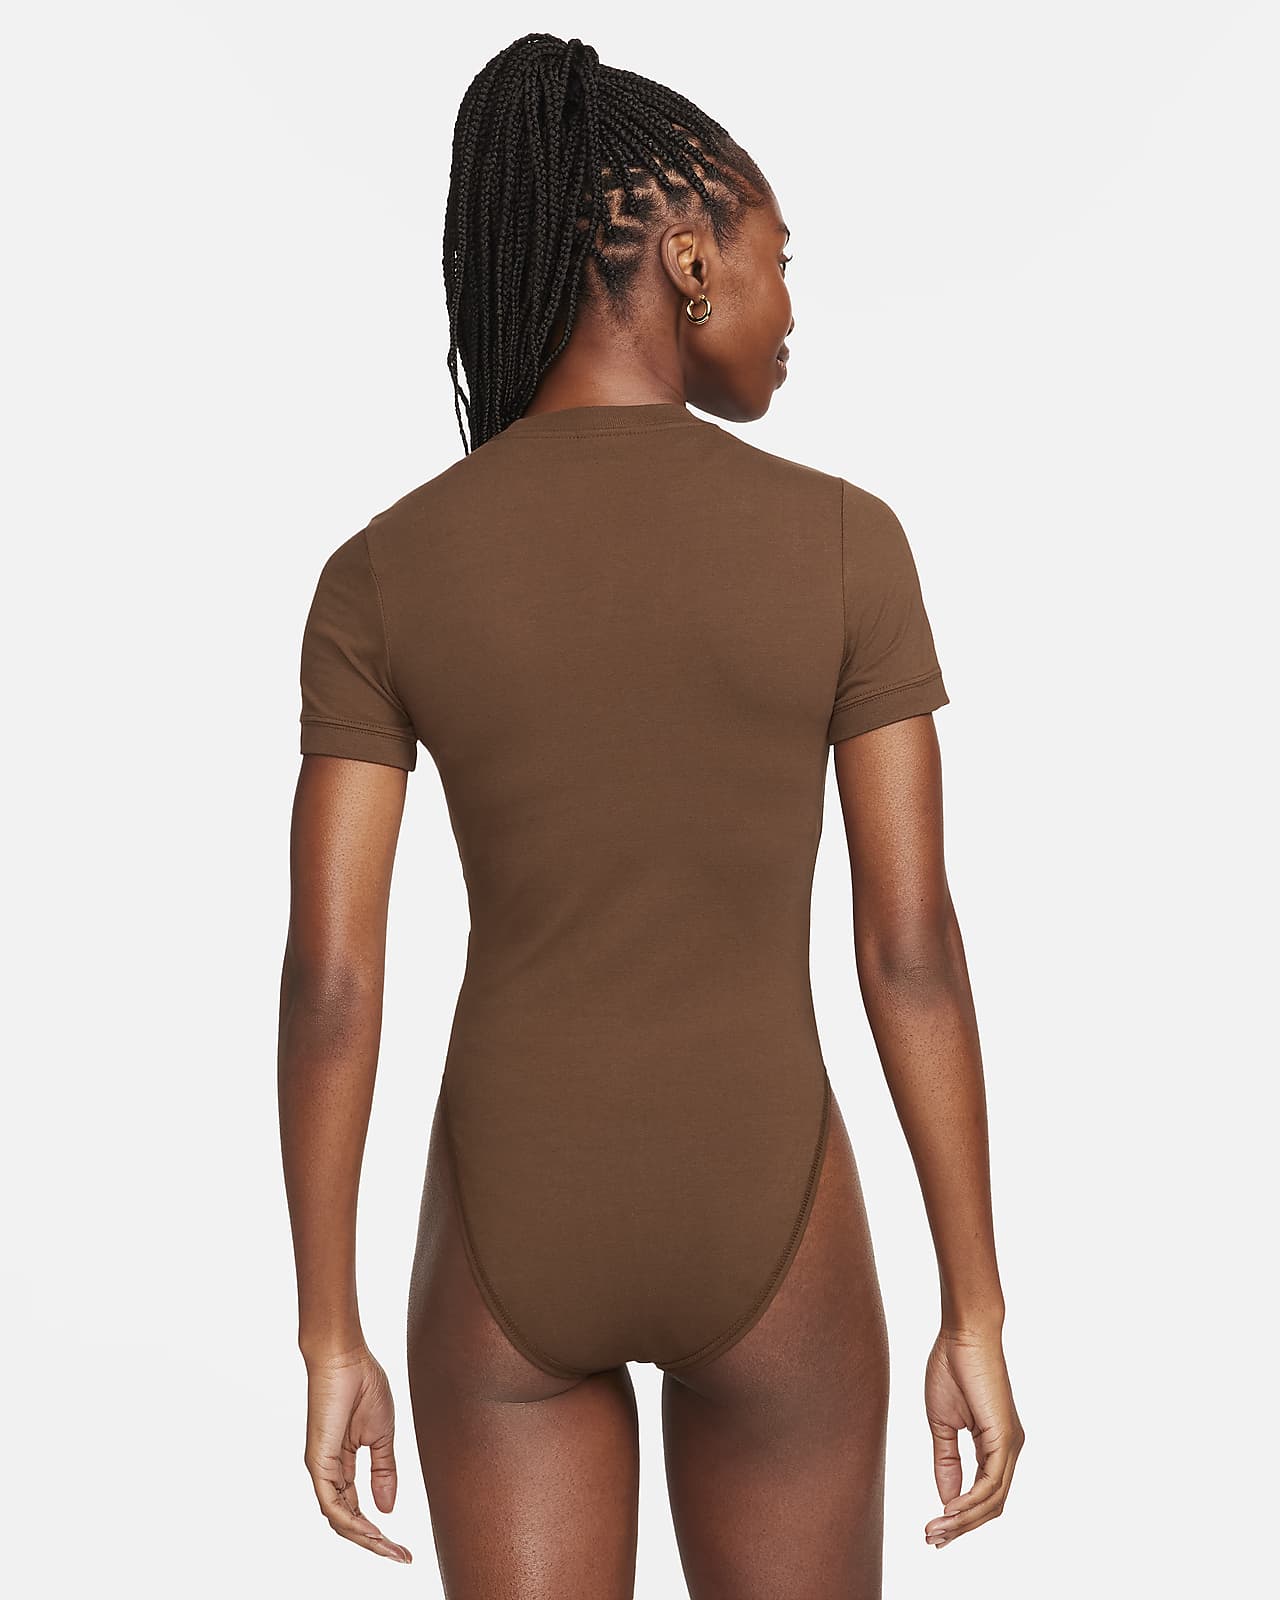  Mid-Thigh Arm Control Short Sleeve Bodysuit. Body